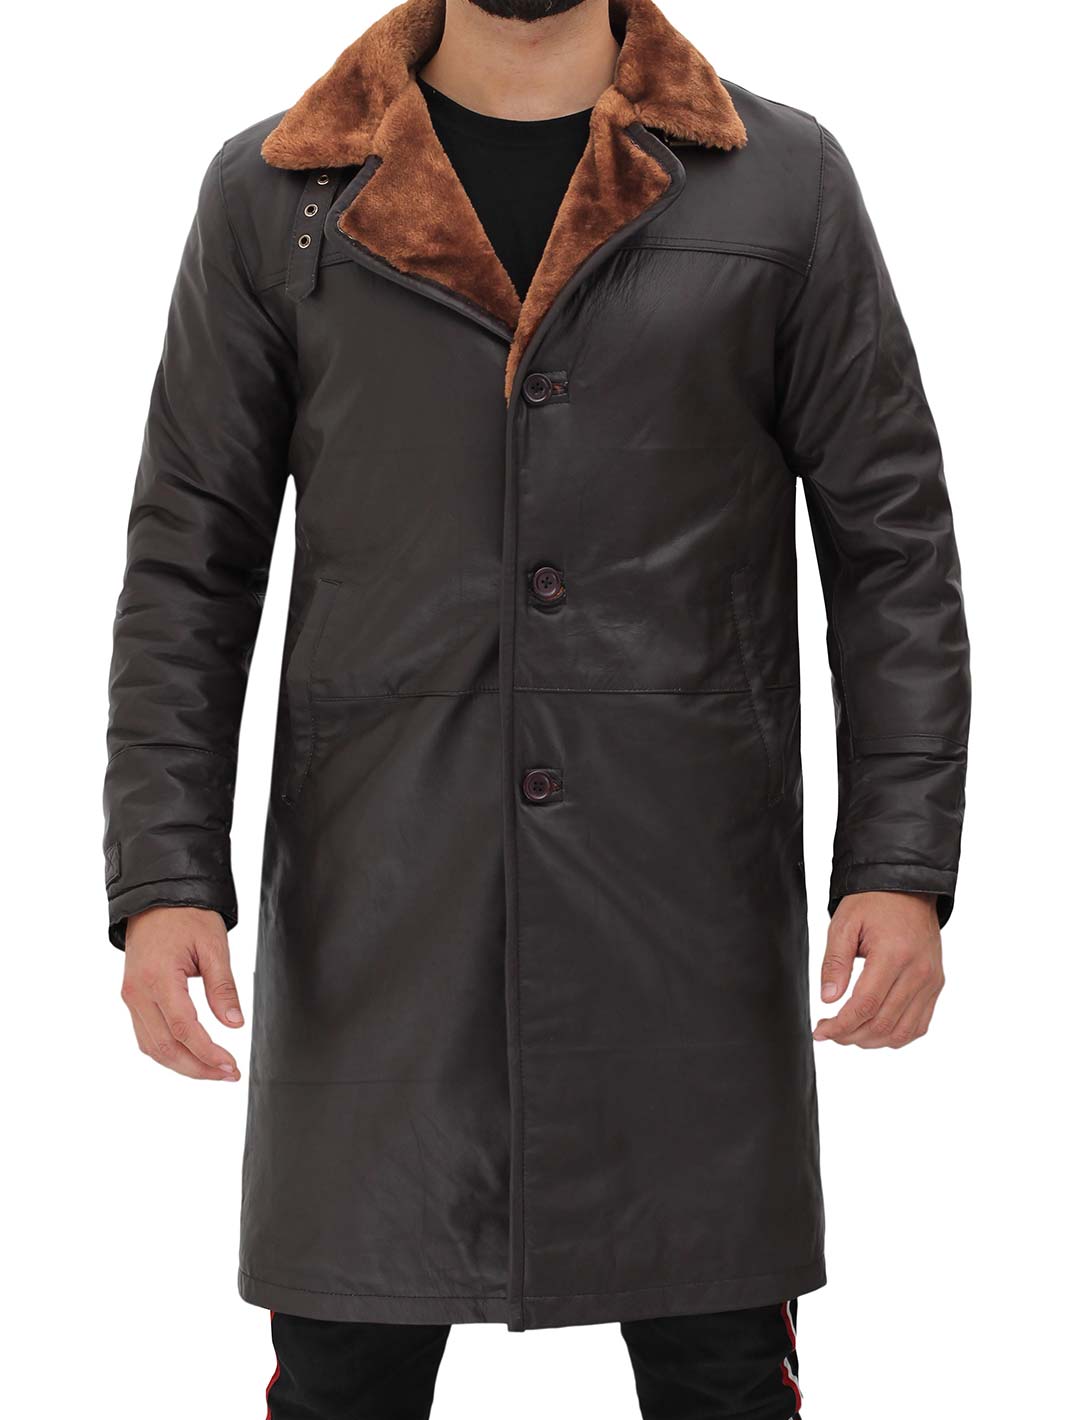 Men's Shearling Leather Coat | Decrum